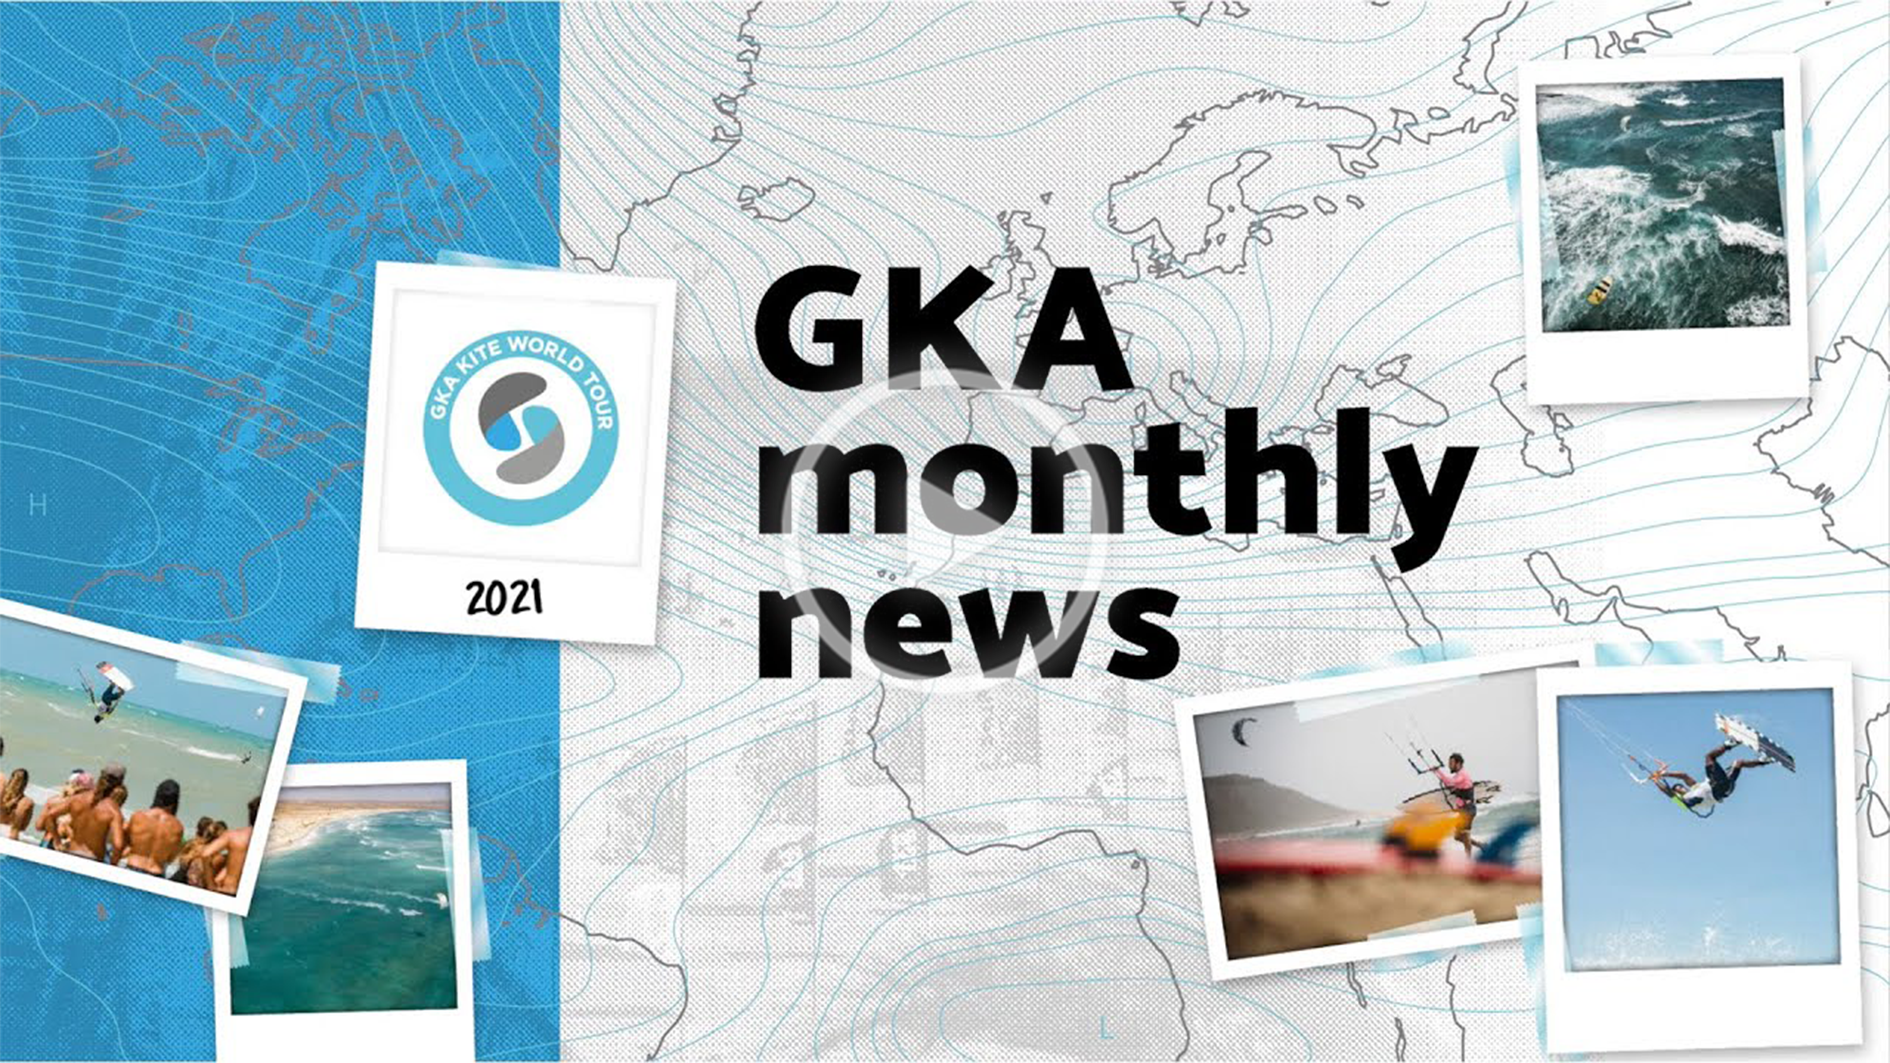 gka - Premier of the All New GKA News Show with Jo Ciastula